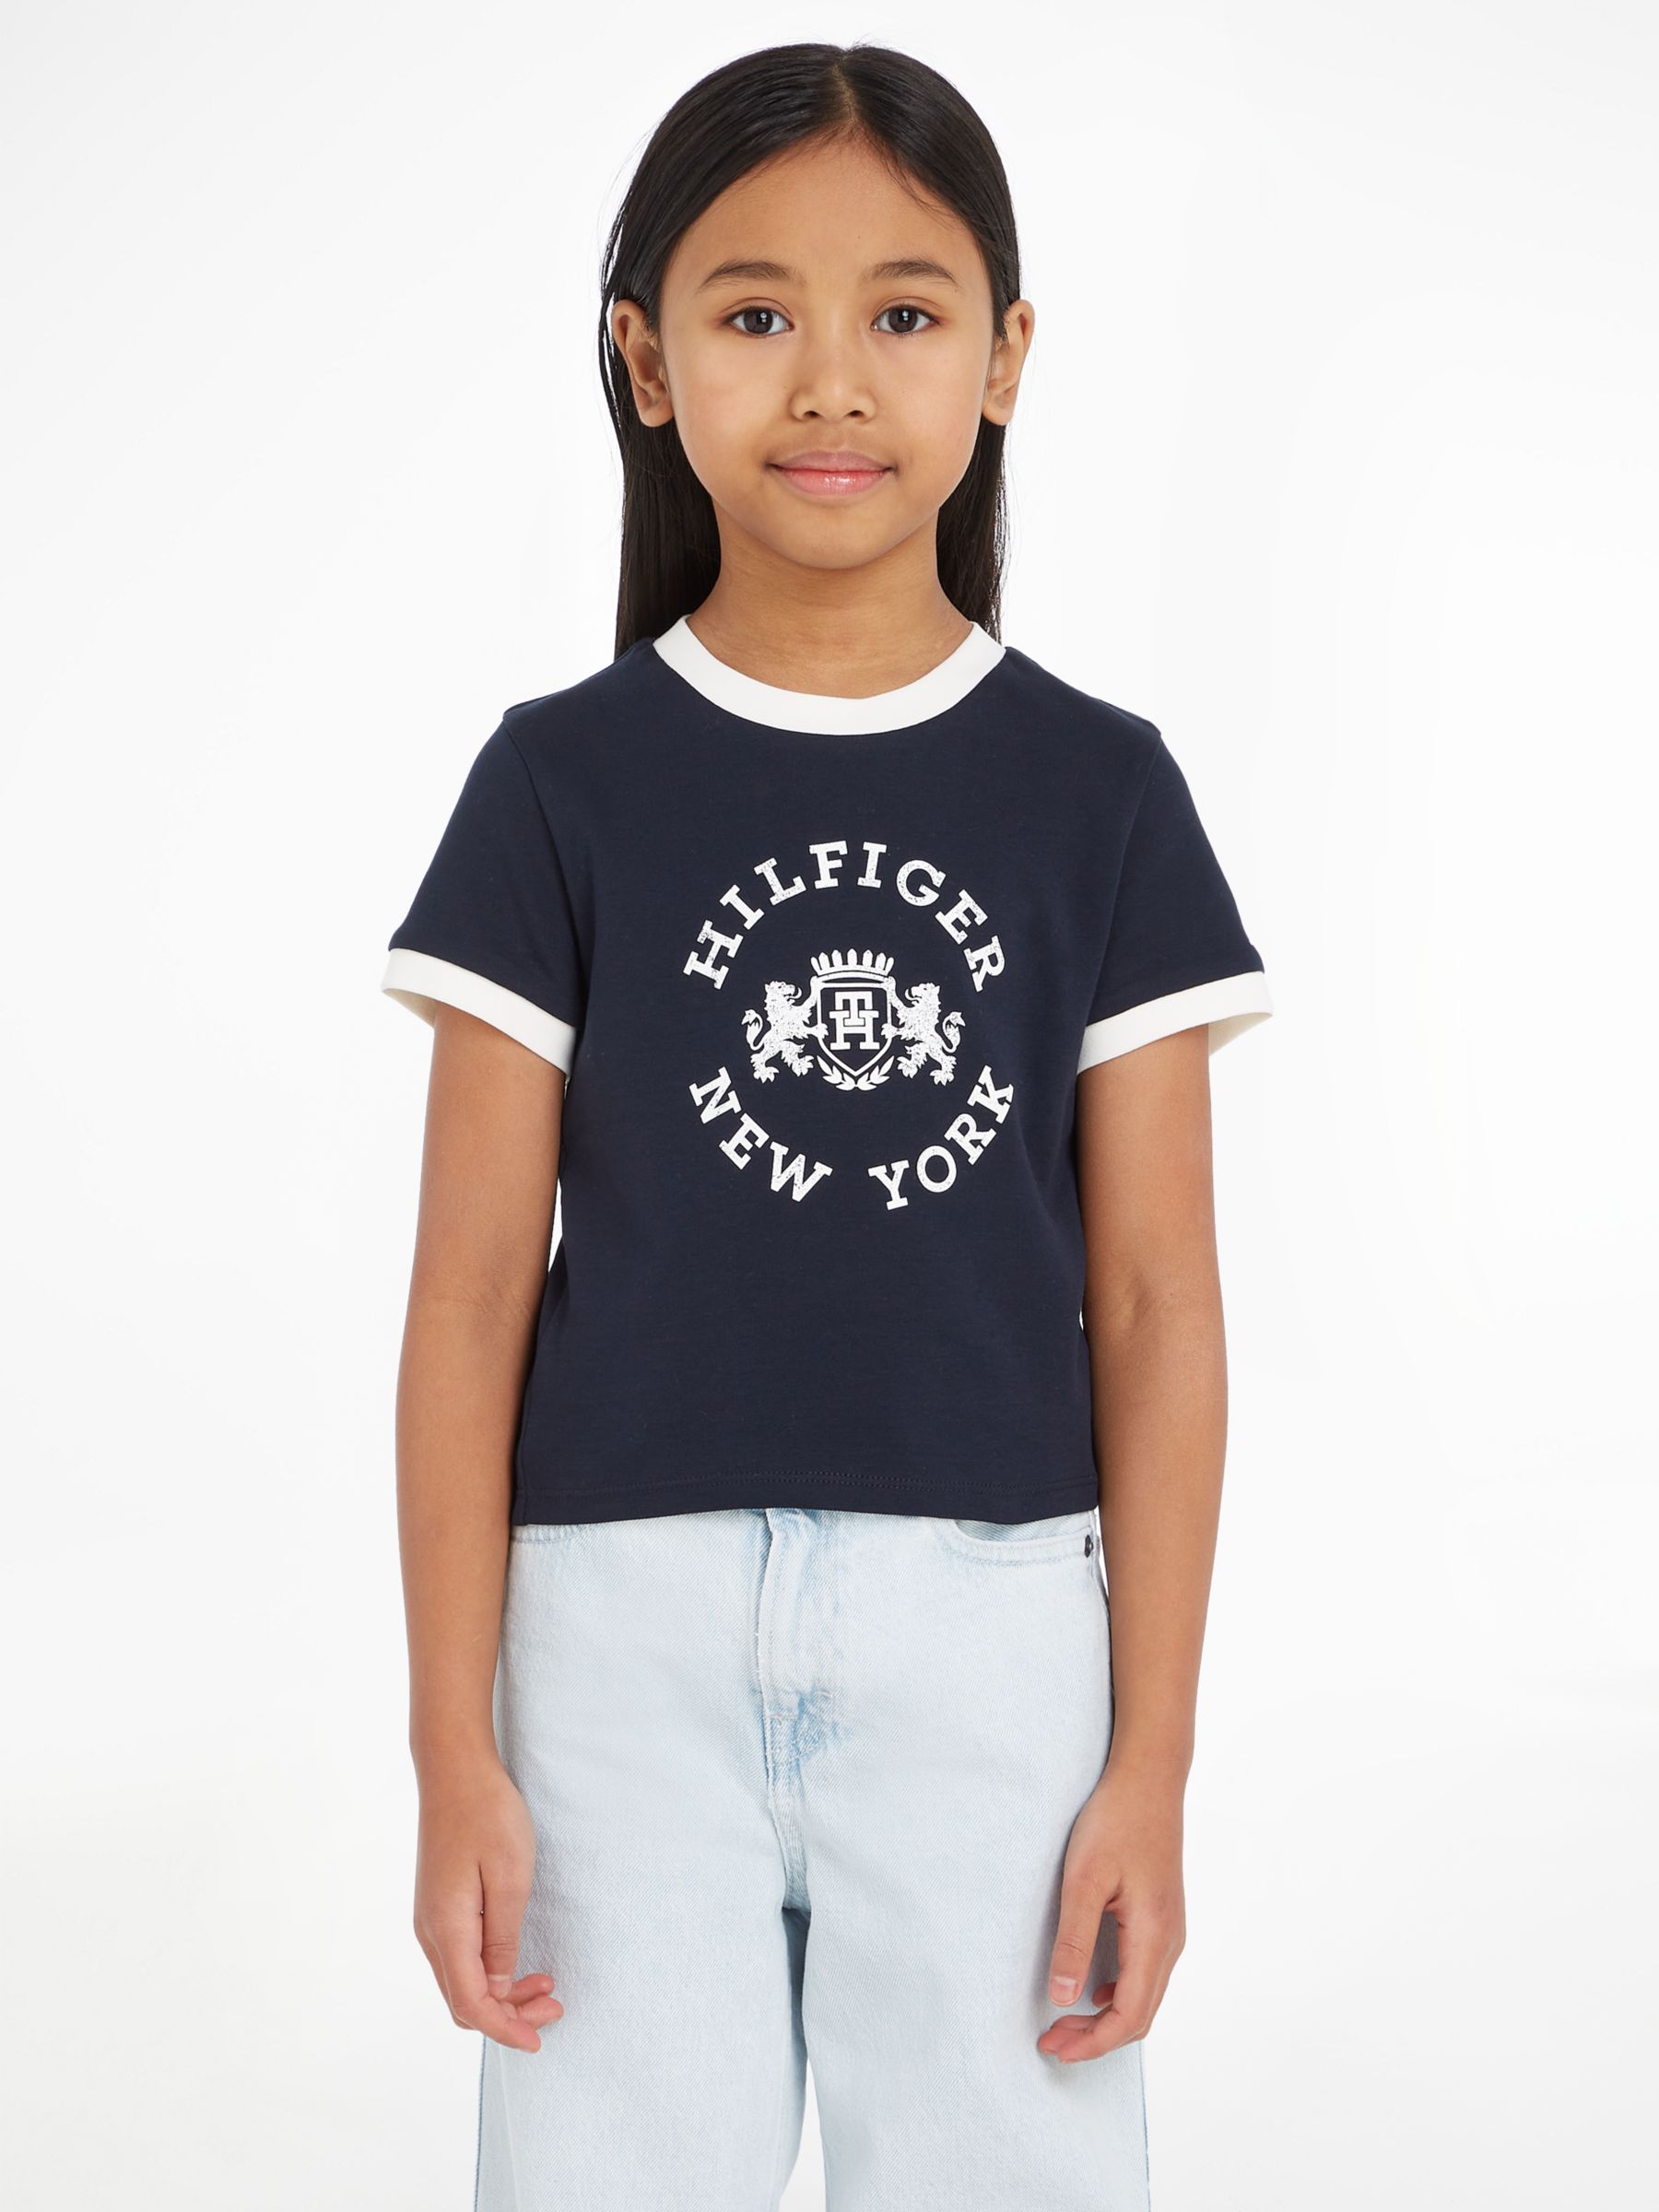 Tommy Hilfiger Kids\' Crest Logo & Desert T-Shirt, John at Sky Lewis Partners Sleeve Short